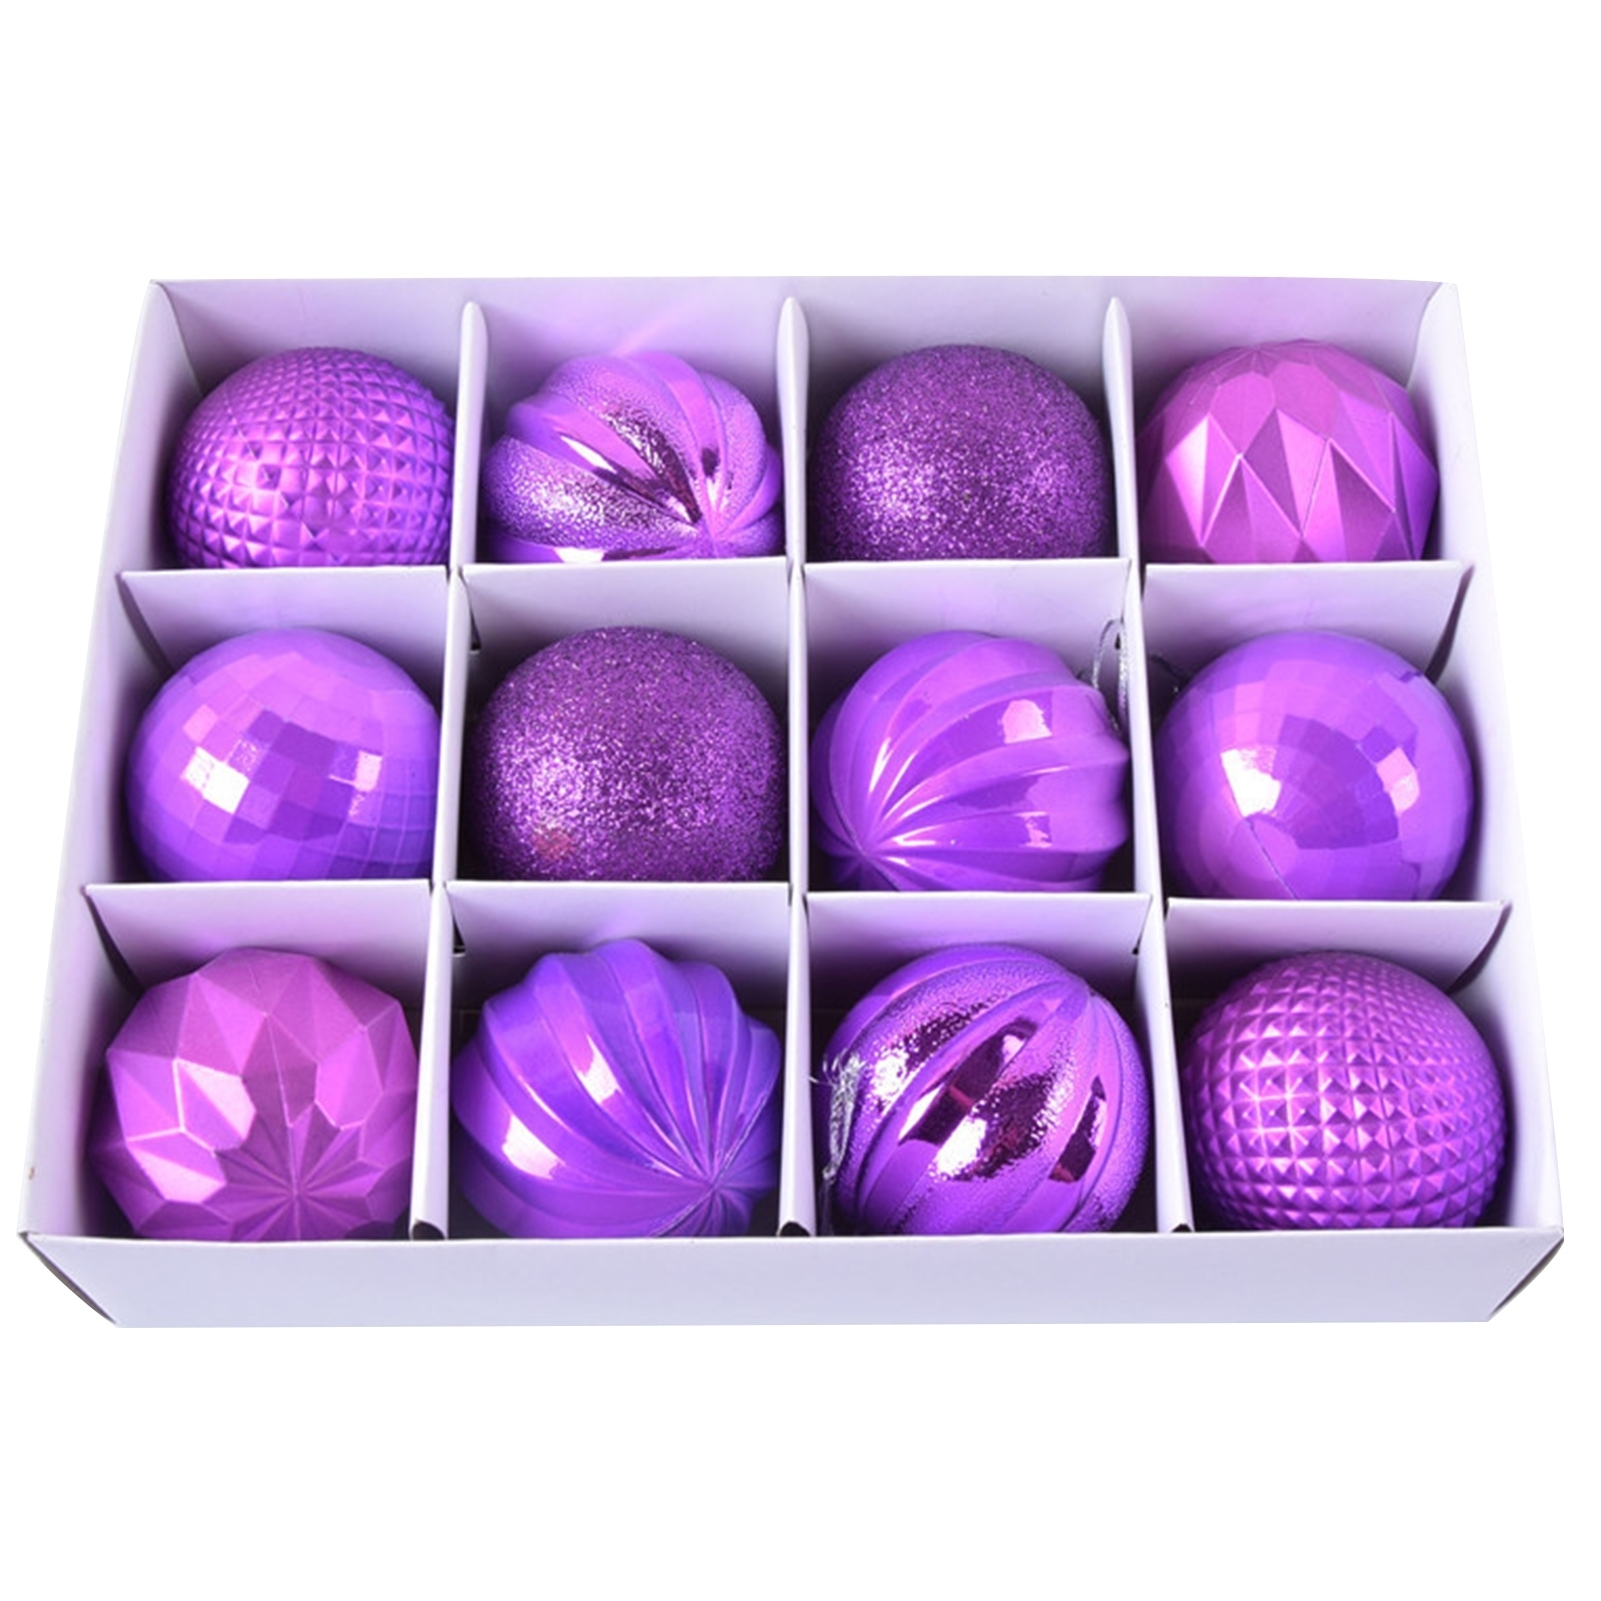 12Pcs Xmas Tree Decorative Ball Hanging Pendant Home Ornaments New Year Gift - purple